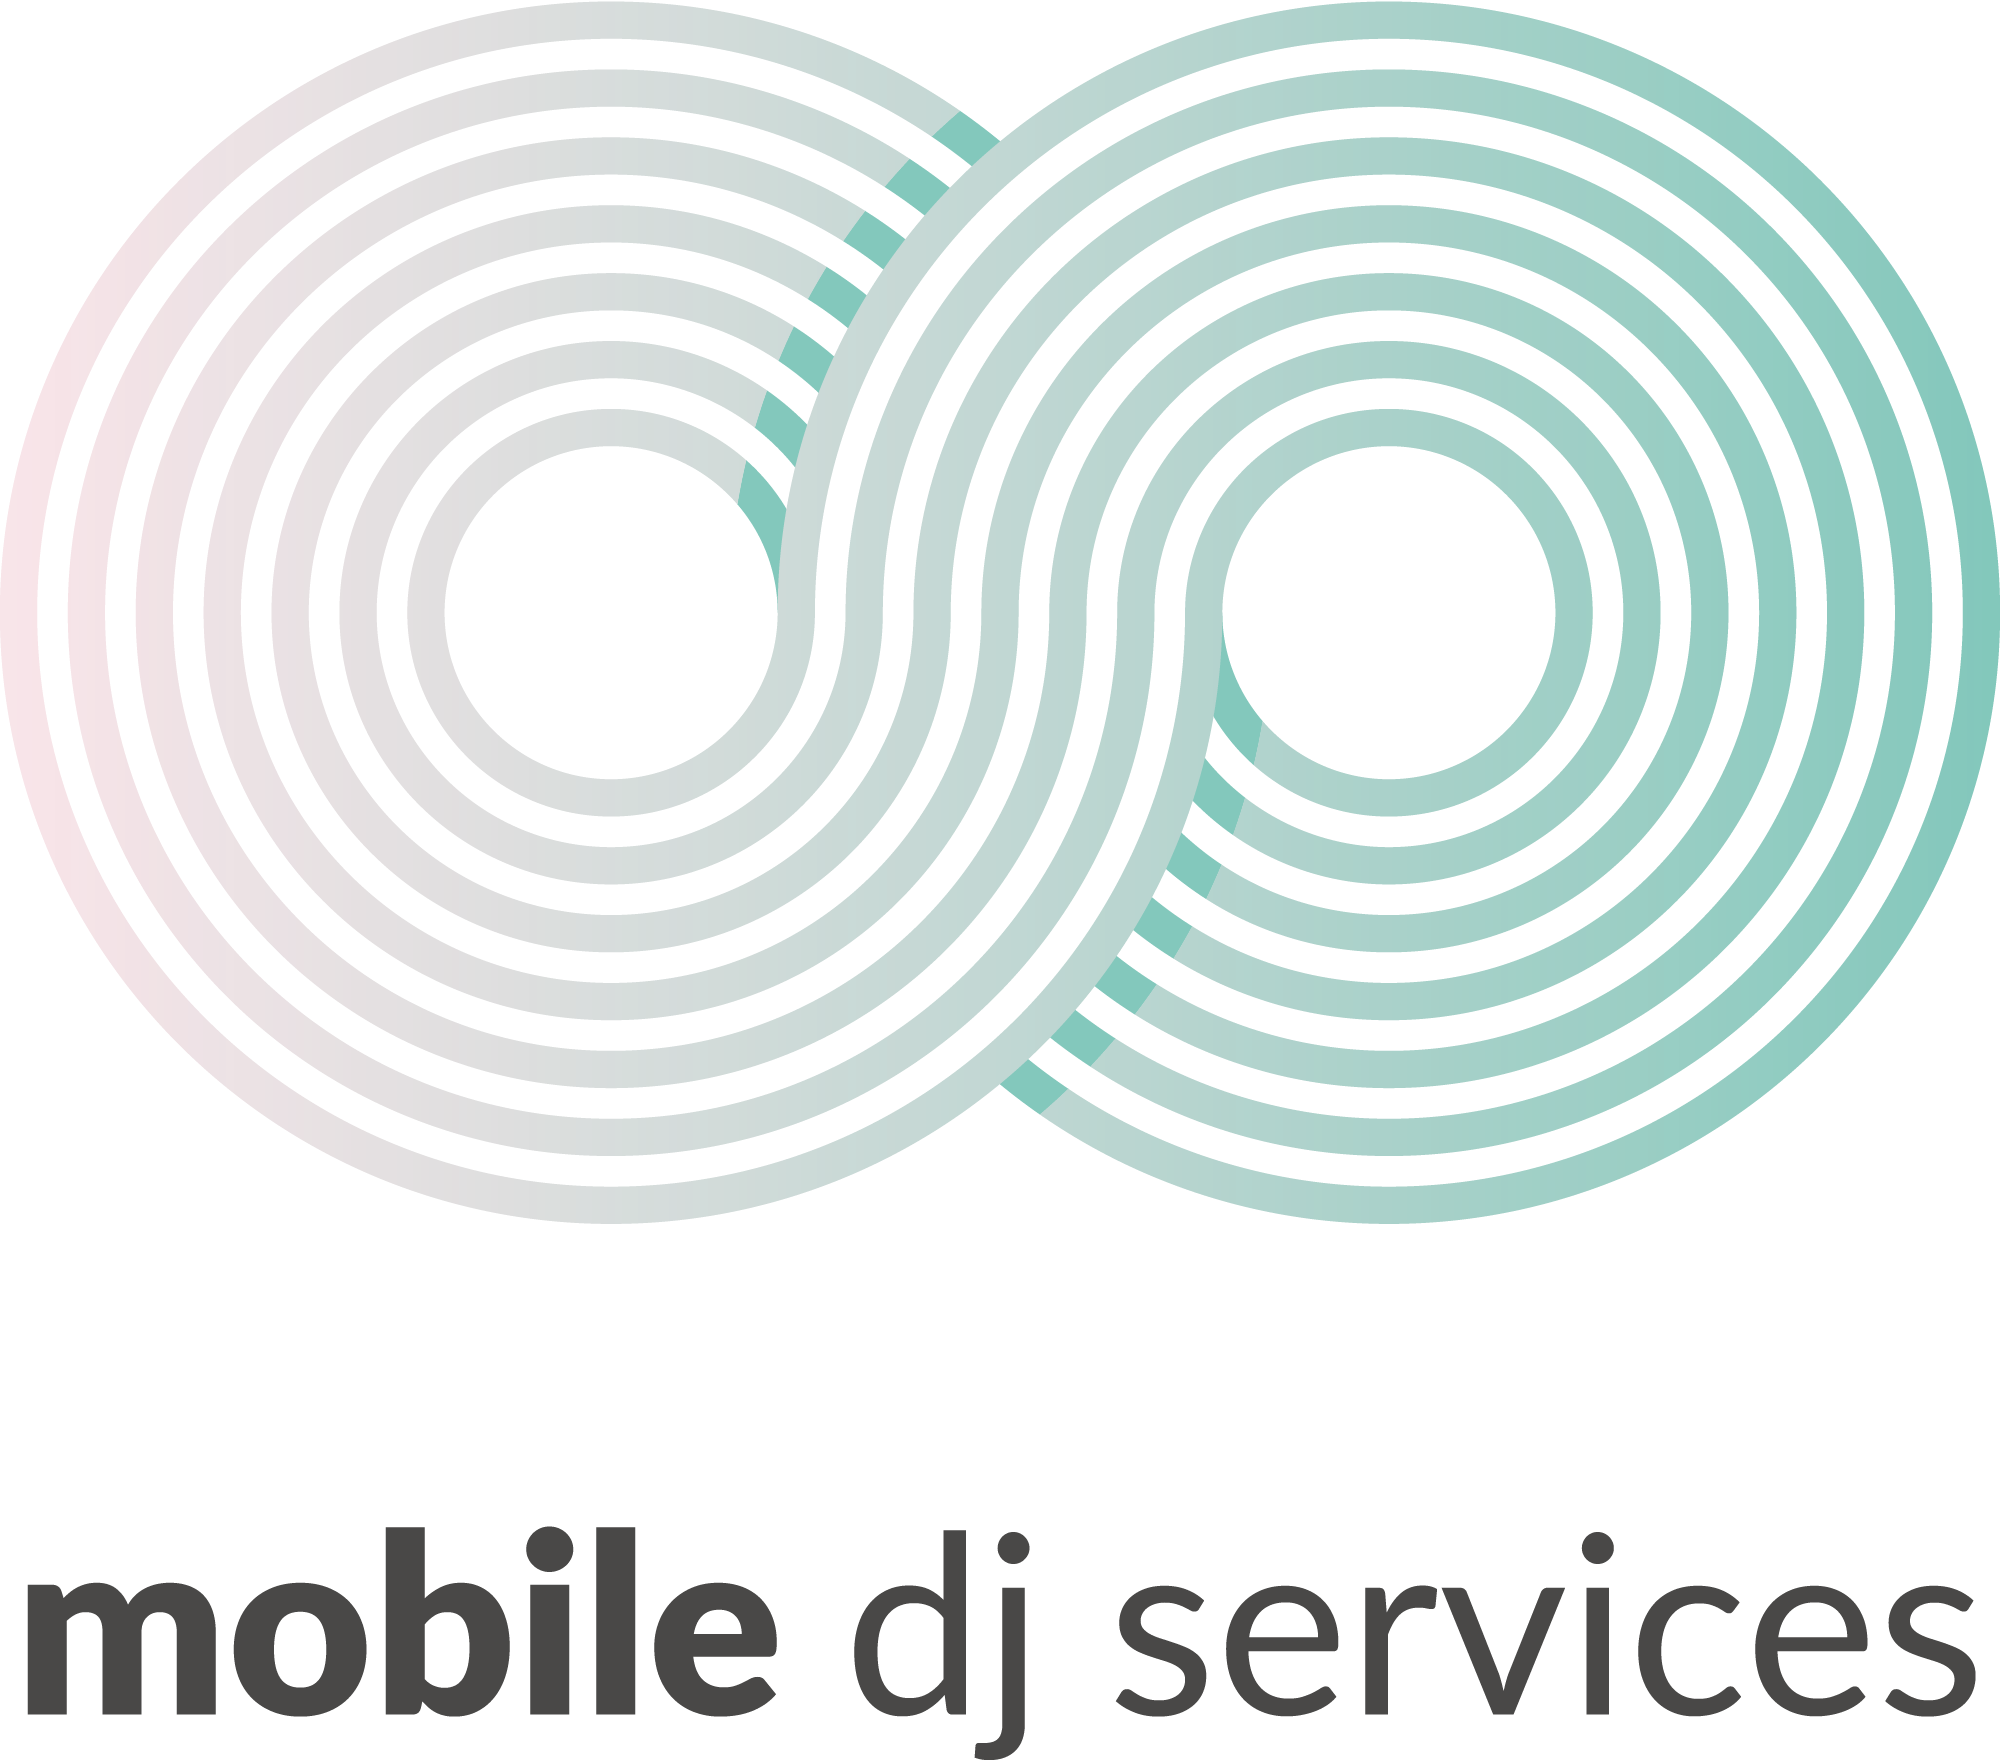 Mobile DJ Services, LLC - 1